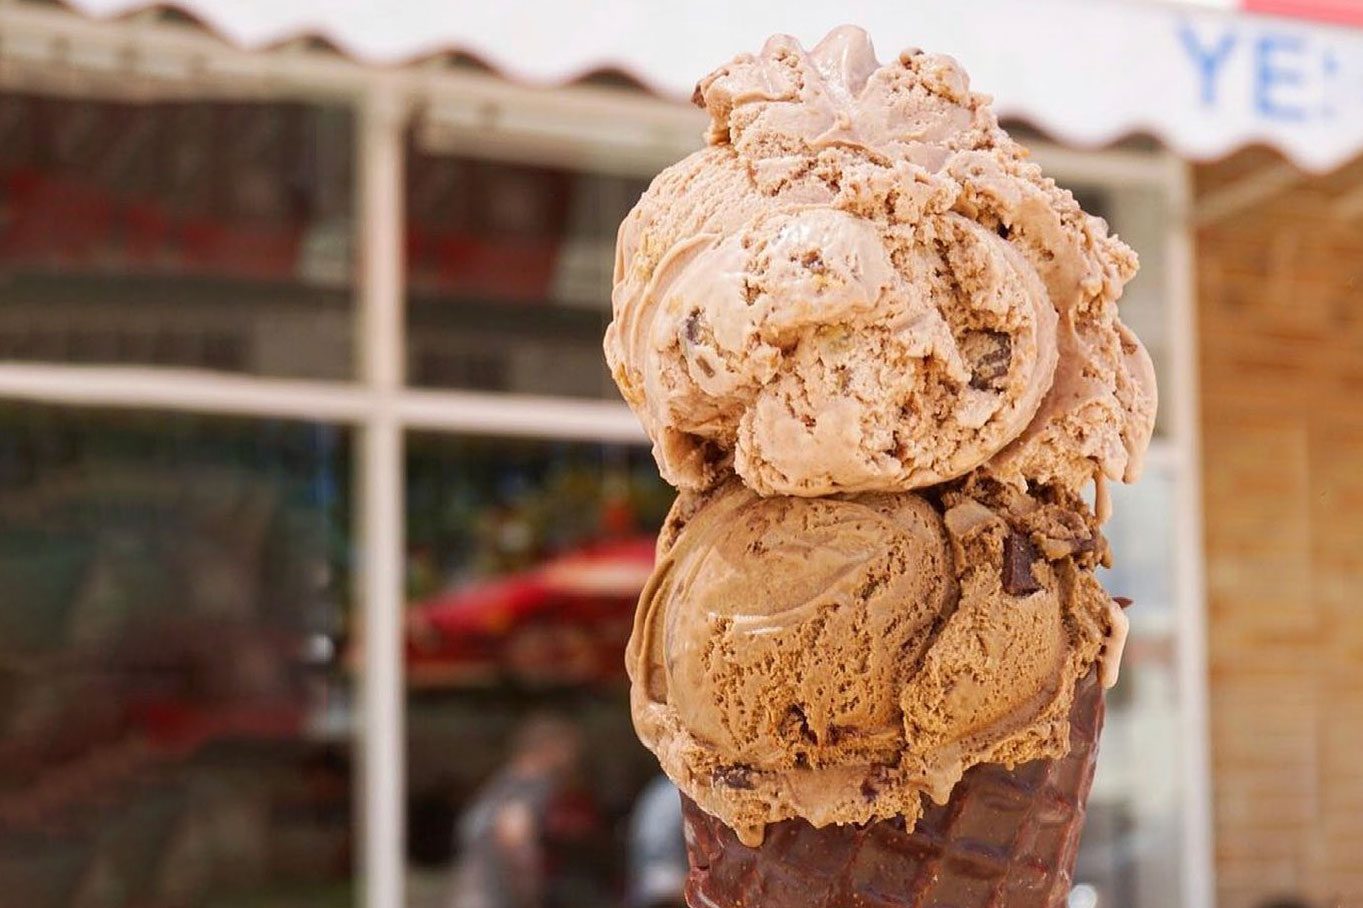 https://www.rd.com/wp-content/uploads/2019/08/bonnie-brae-ice-cream-via-instagram.jpg?fit=700%2C466